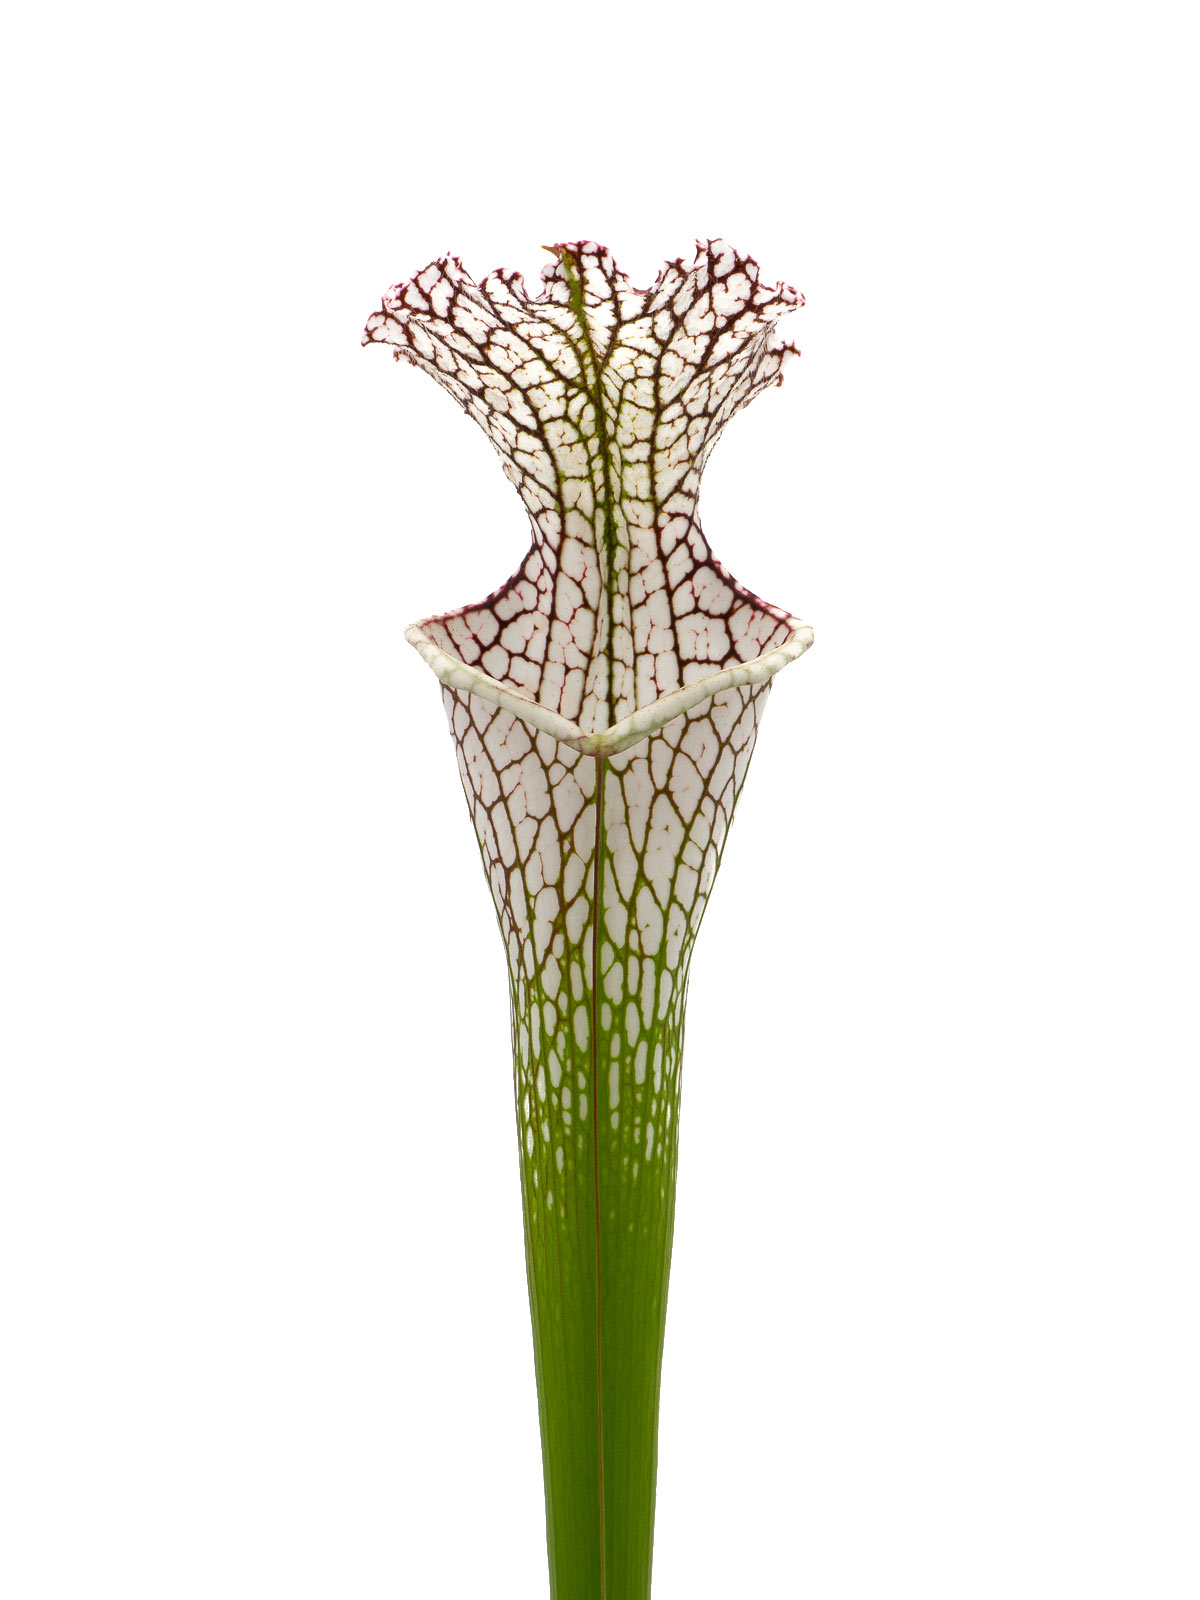 Sarracenia leucophylla - white form, MS L36A